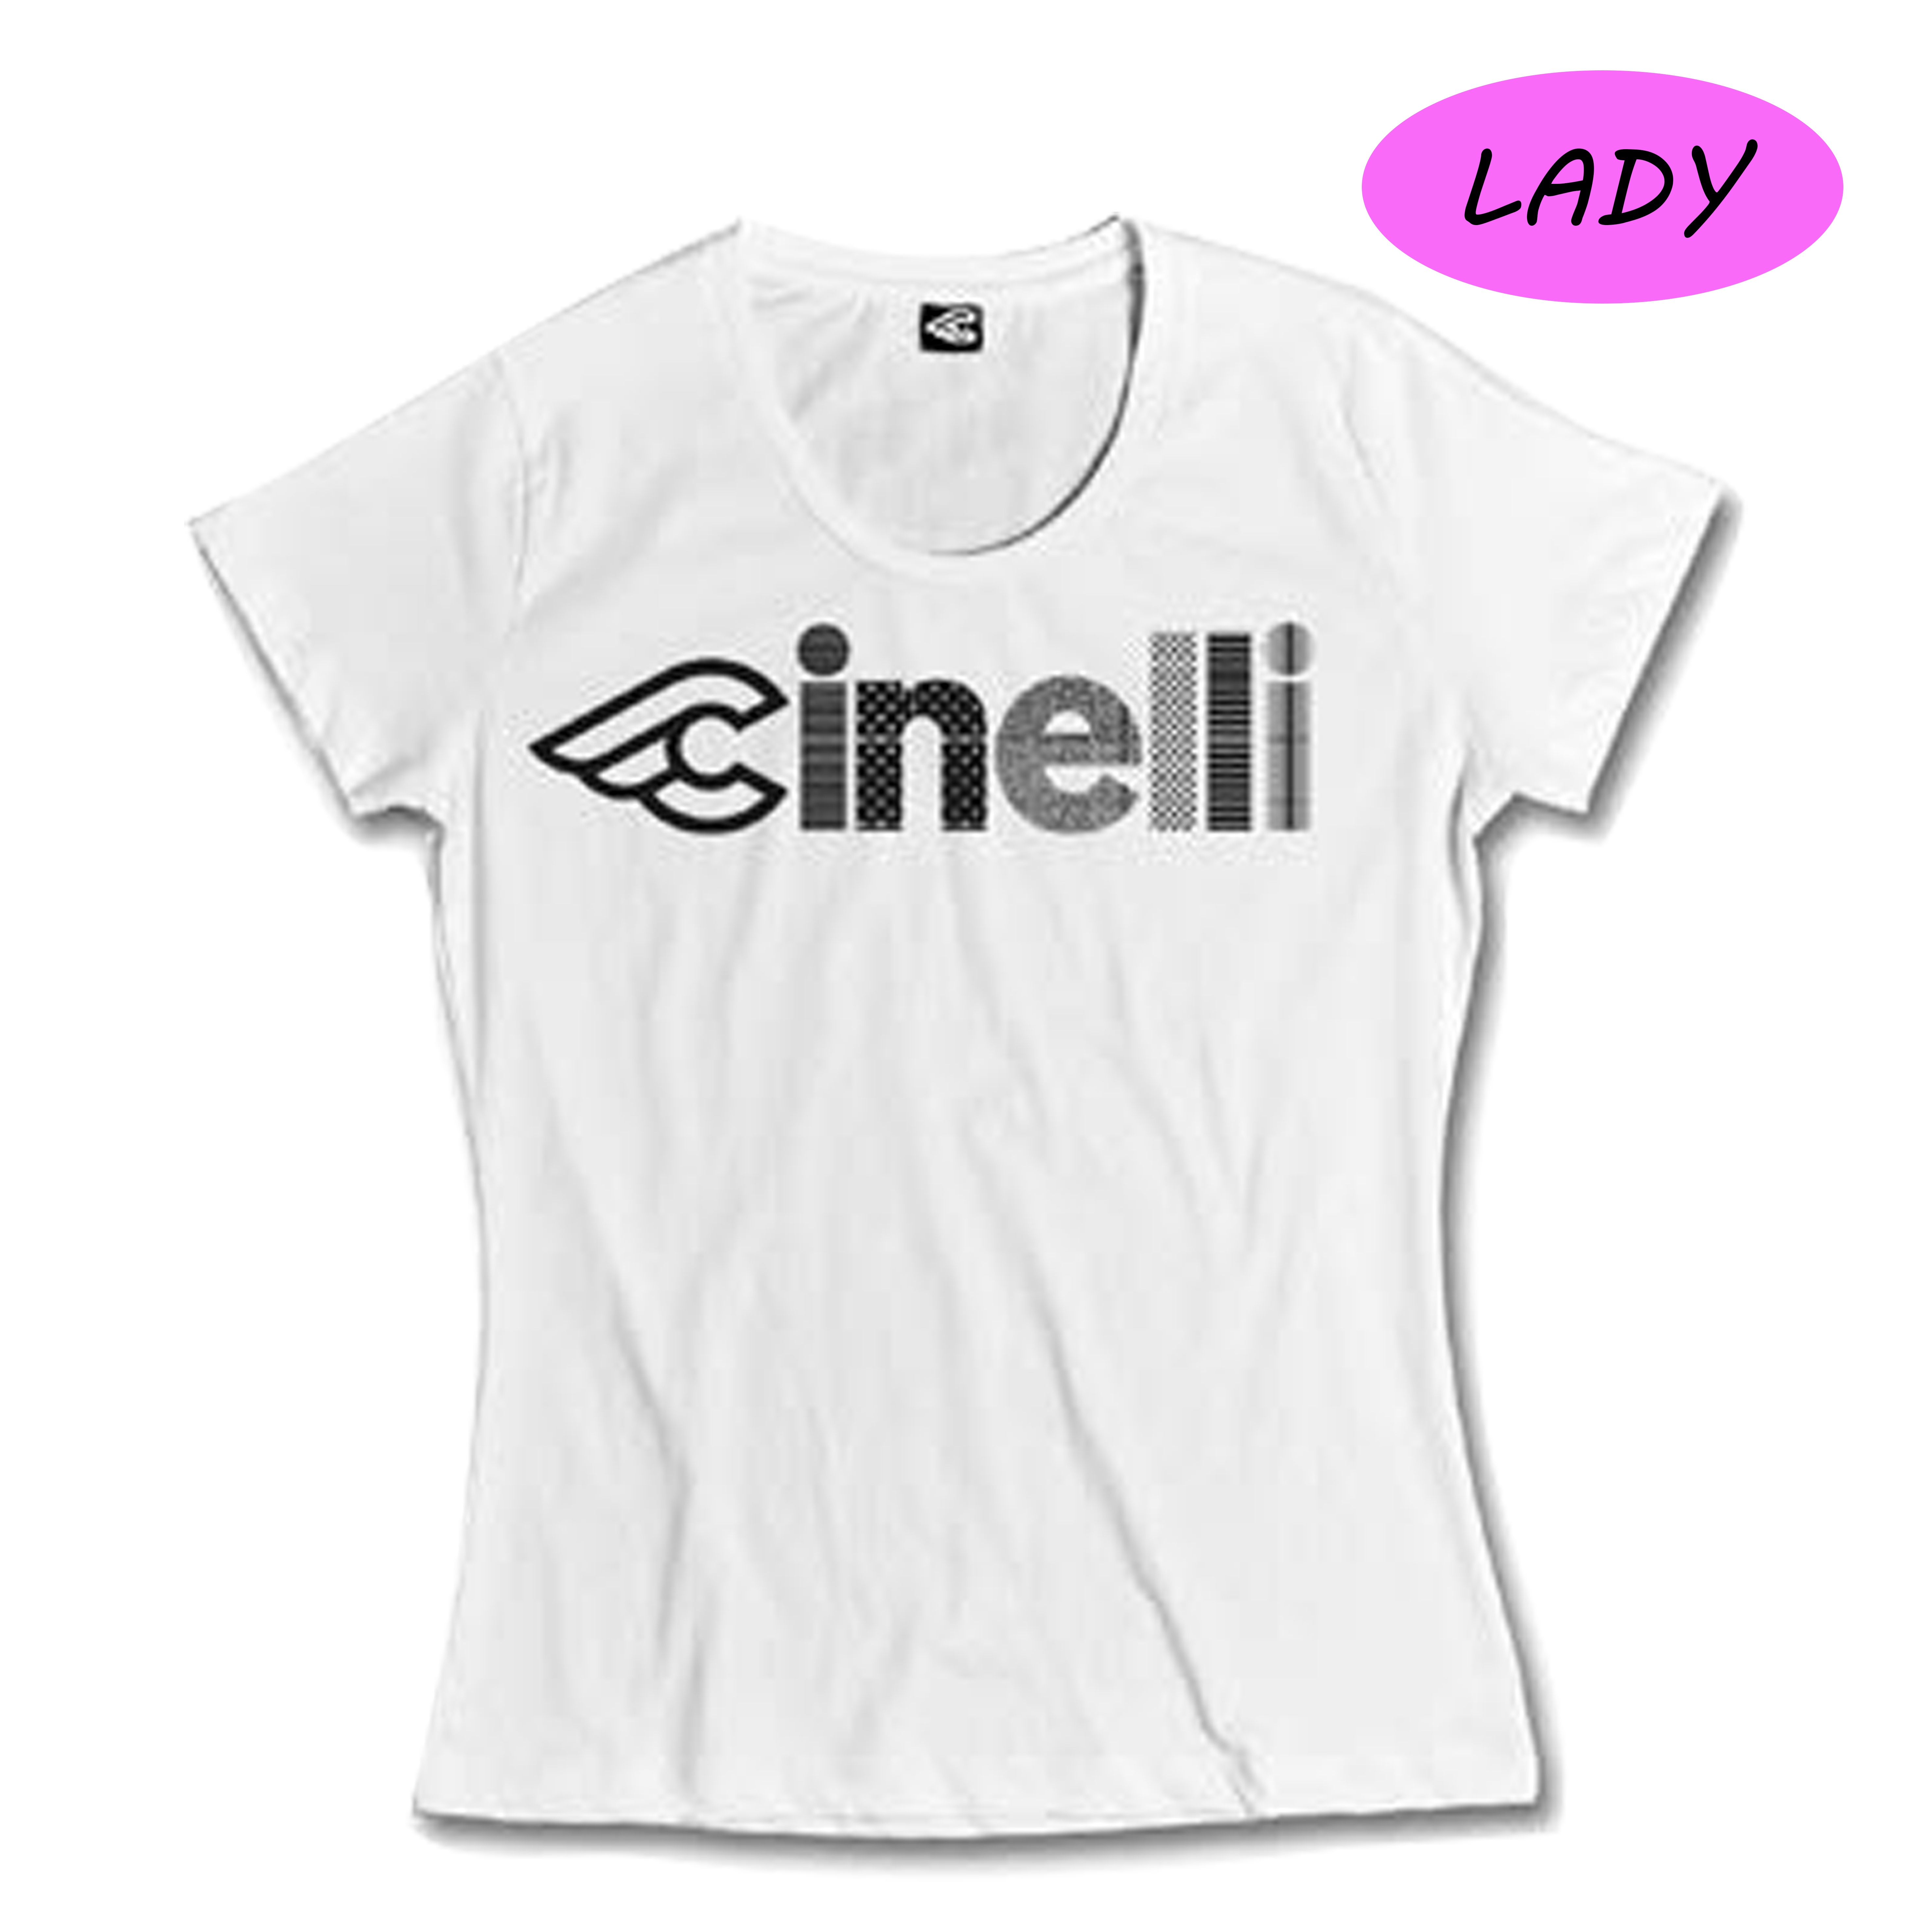 Cinelli Optical Lady T-Shirt